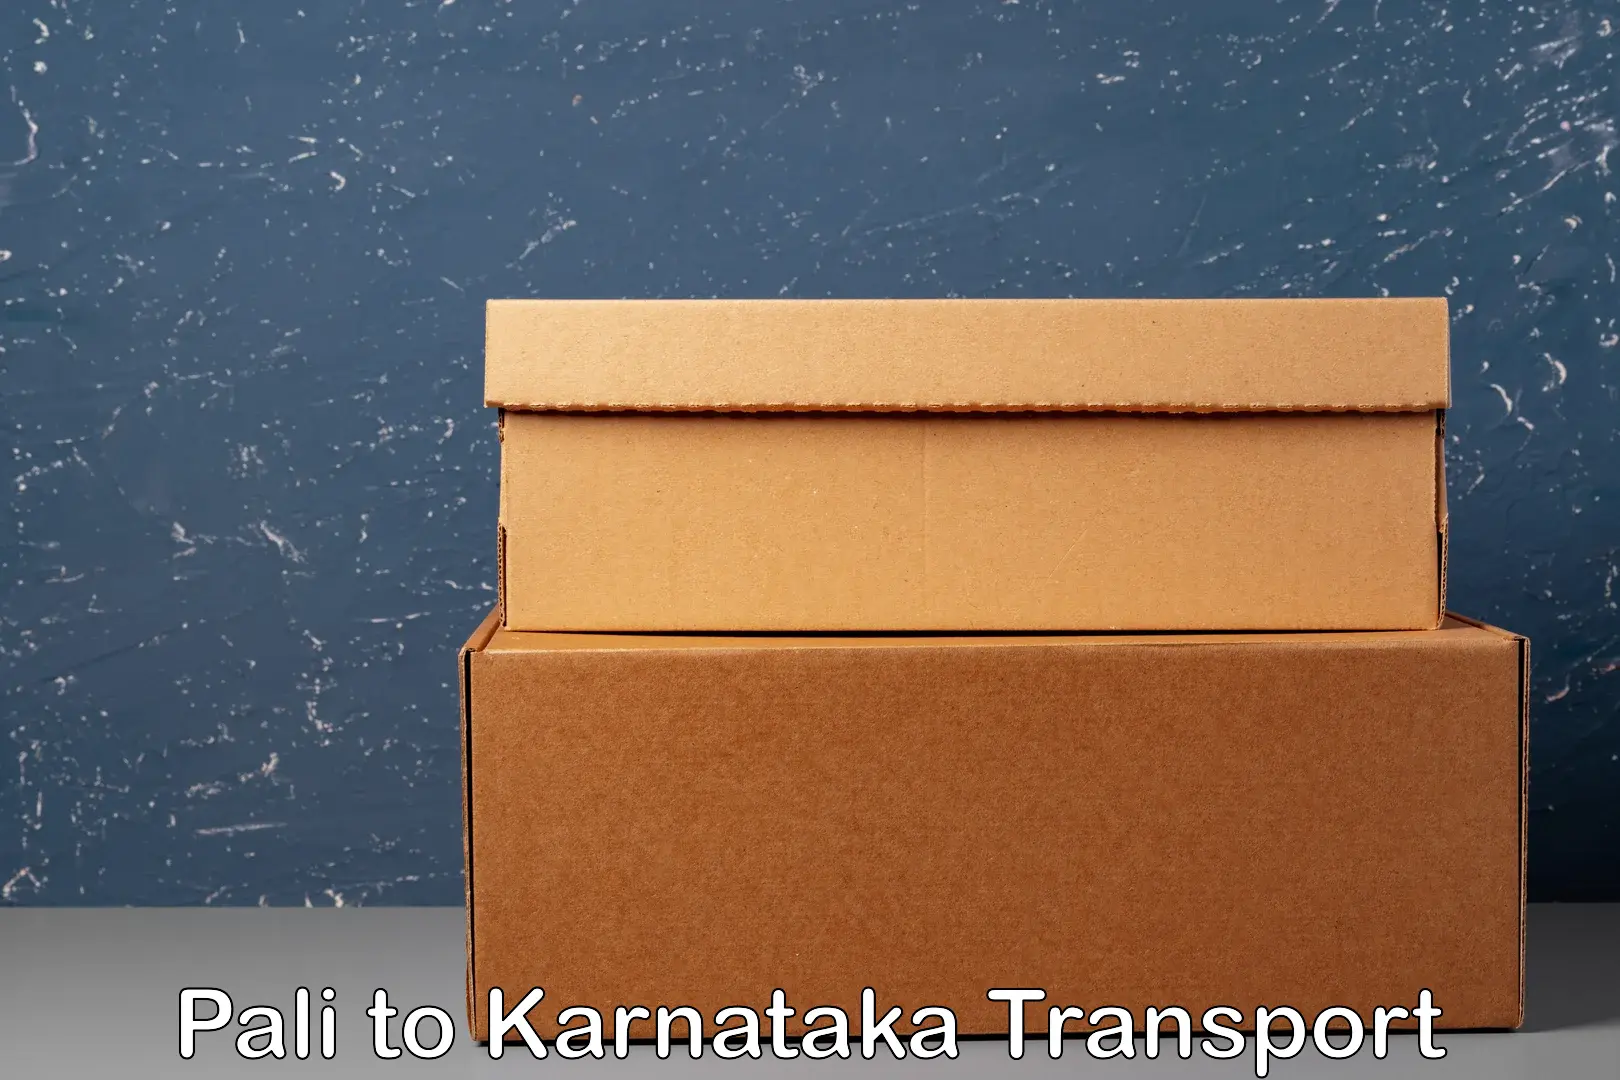 Truck transport companies in India Pali to Karnataka